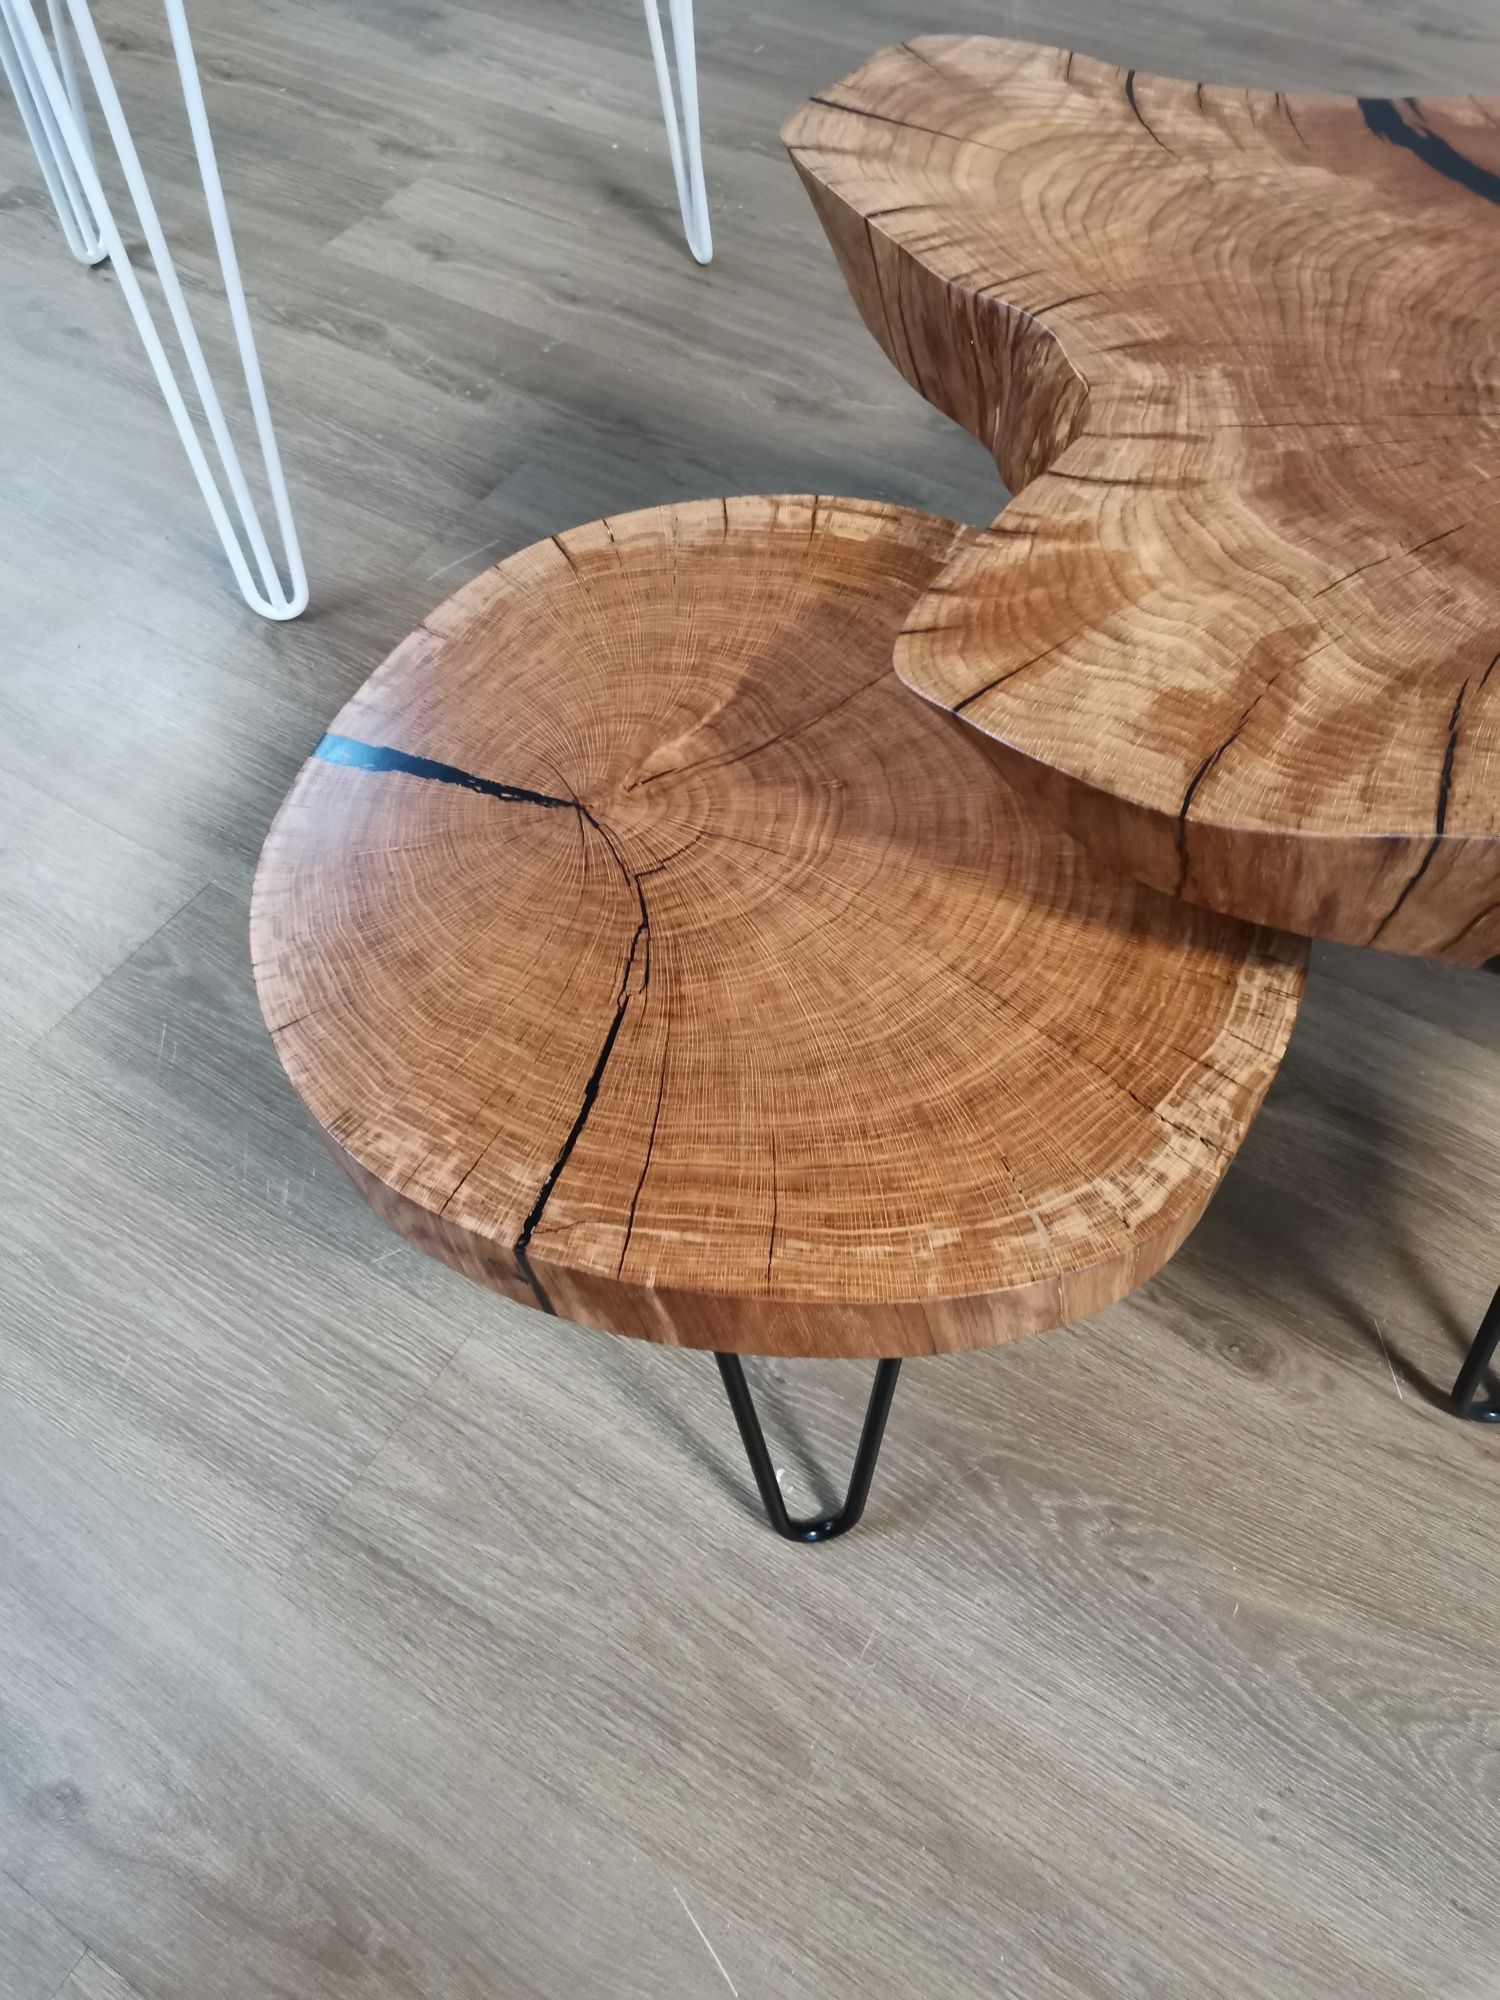 Plaster drewna topoli stolik